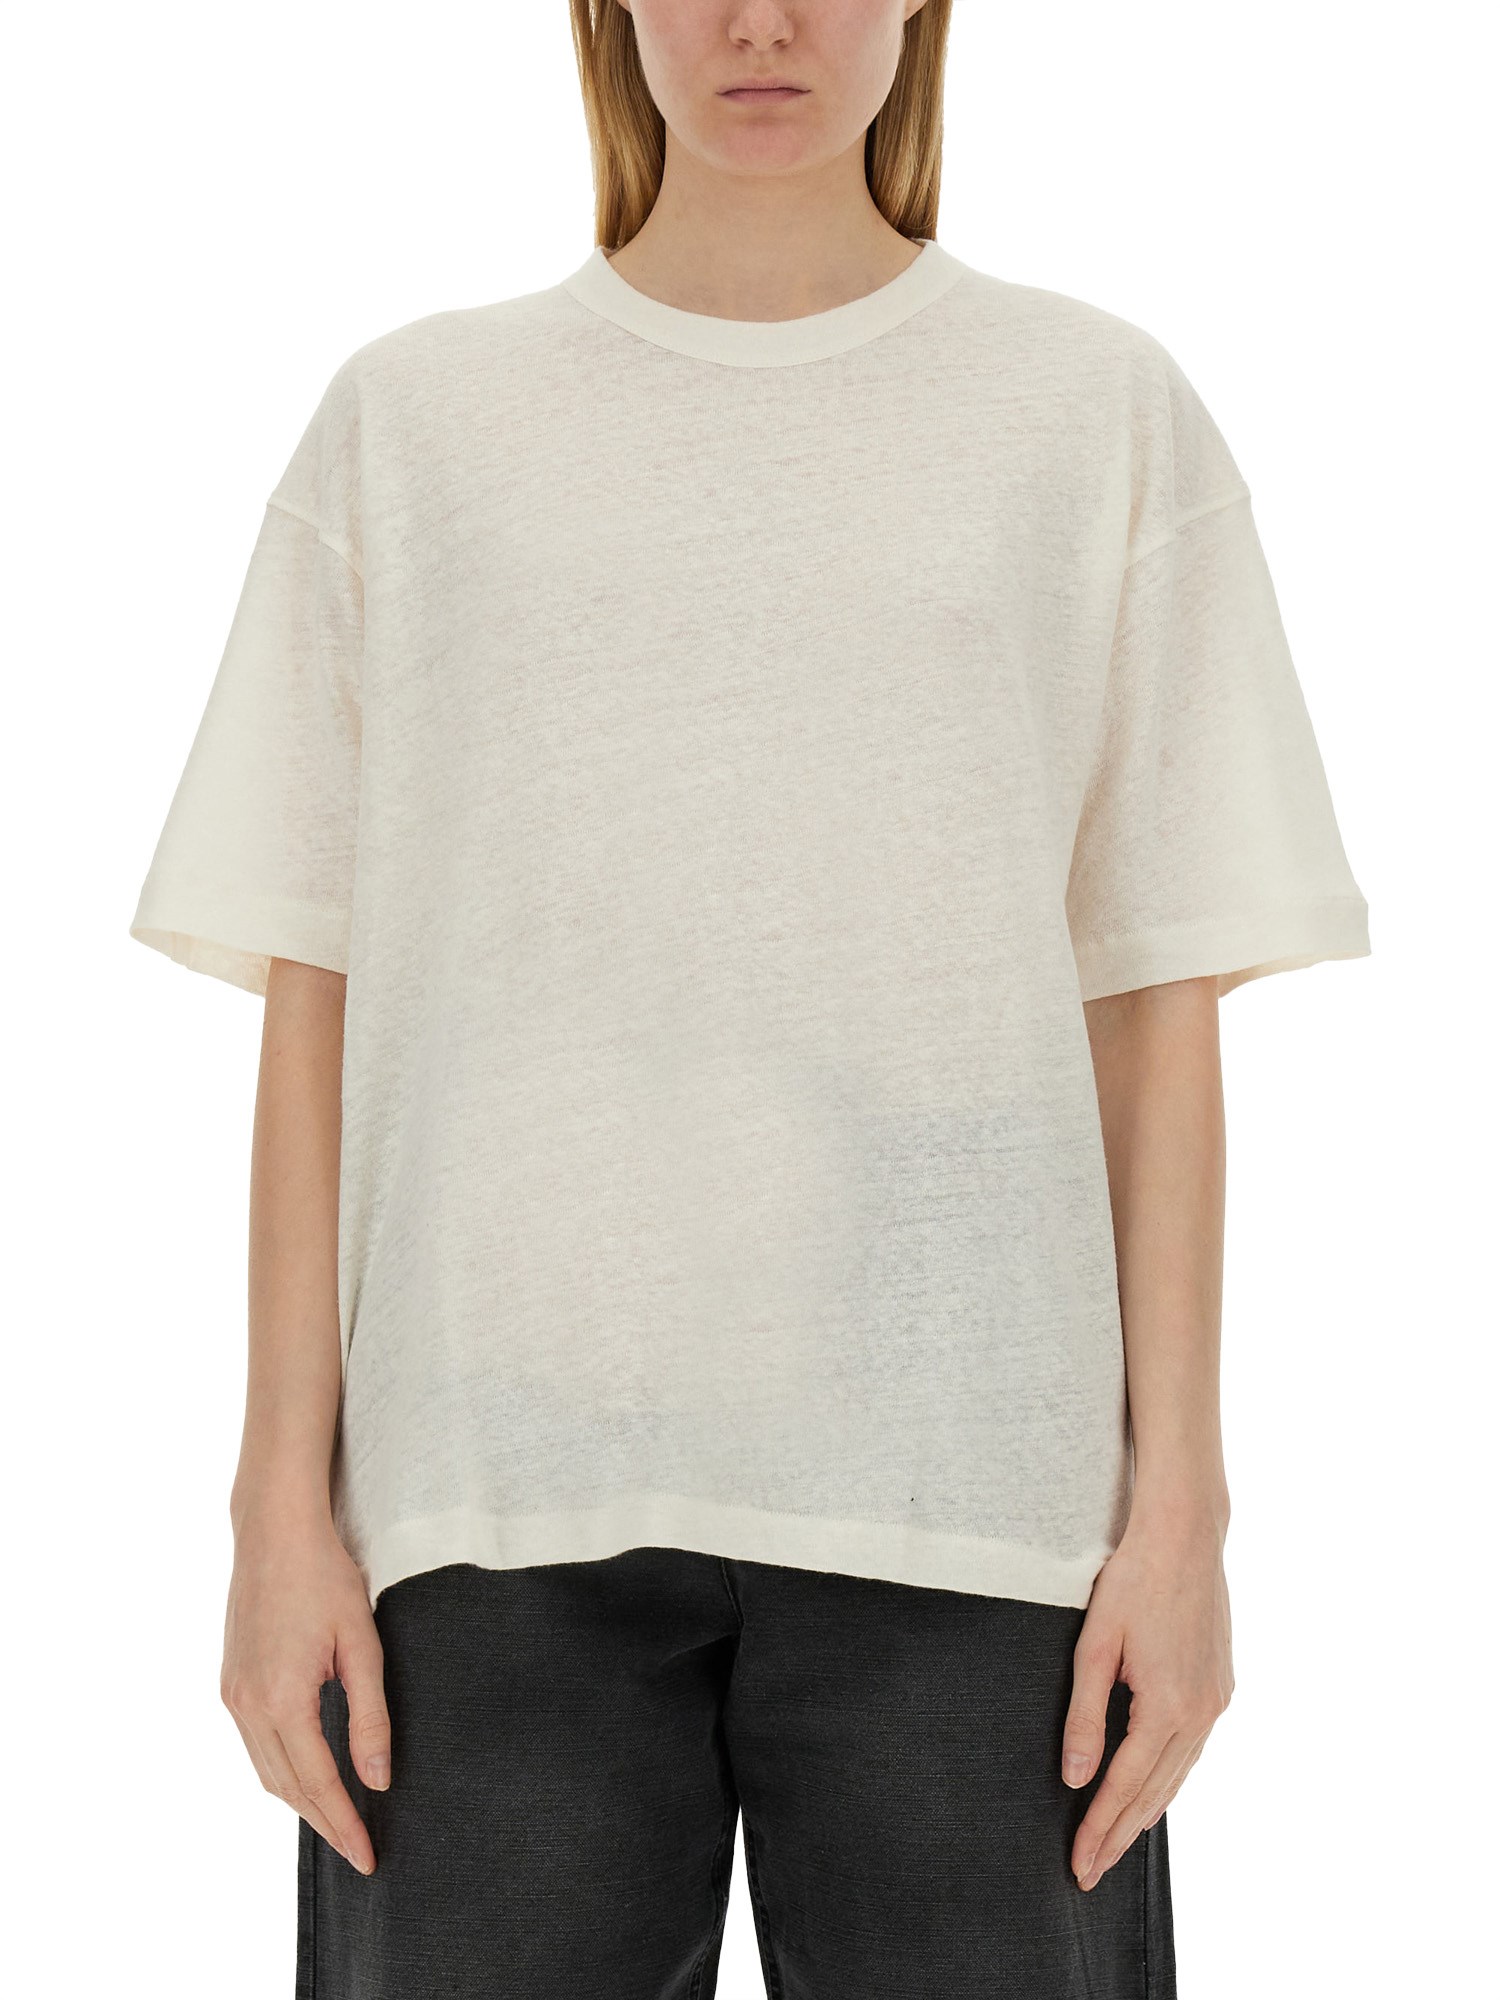 Ymc ymc cotton and linen t-shirt